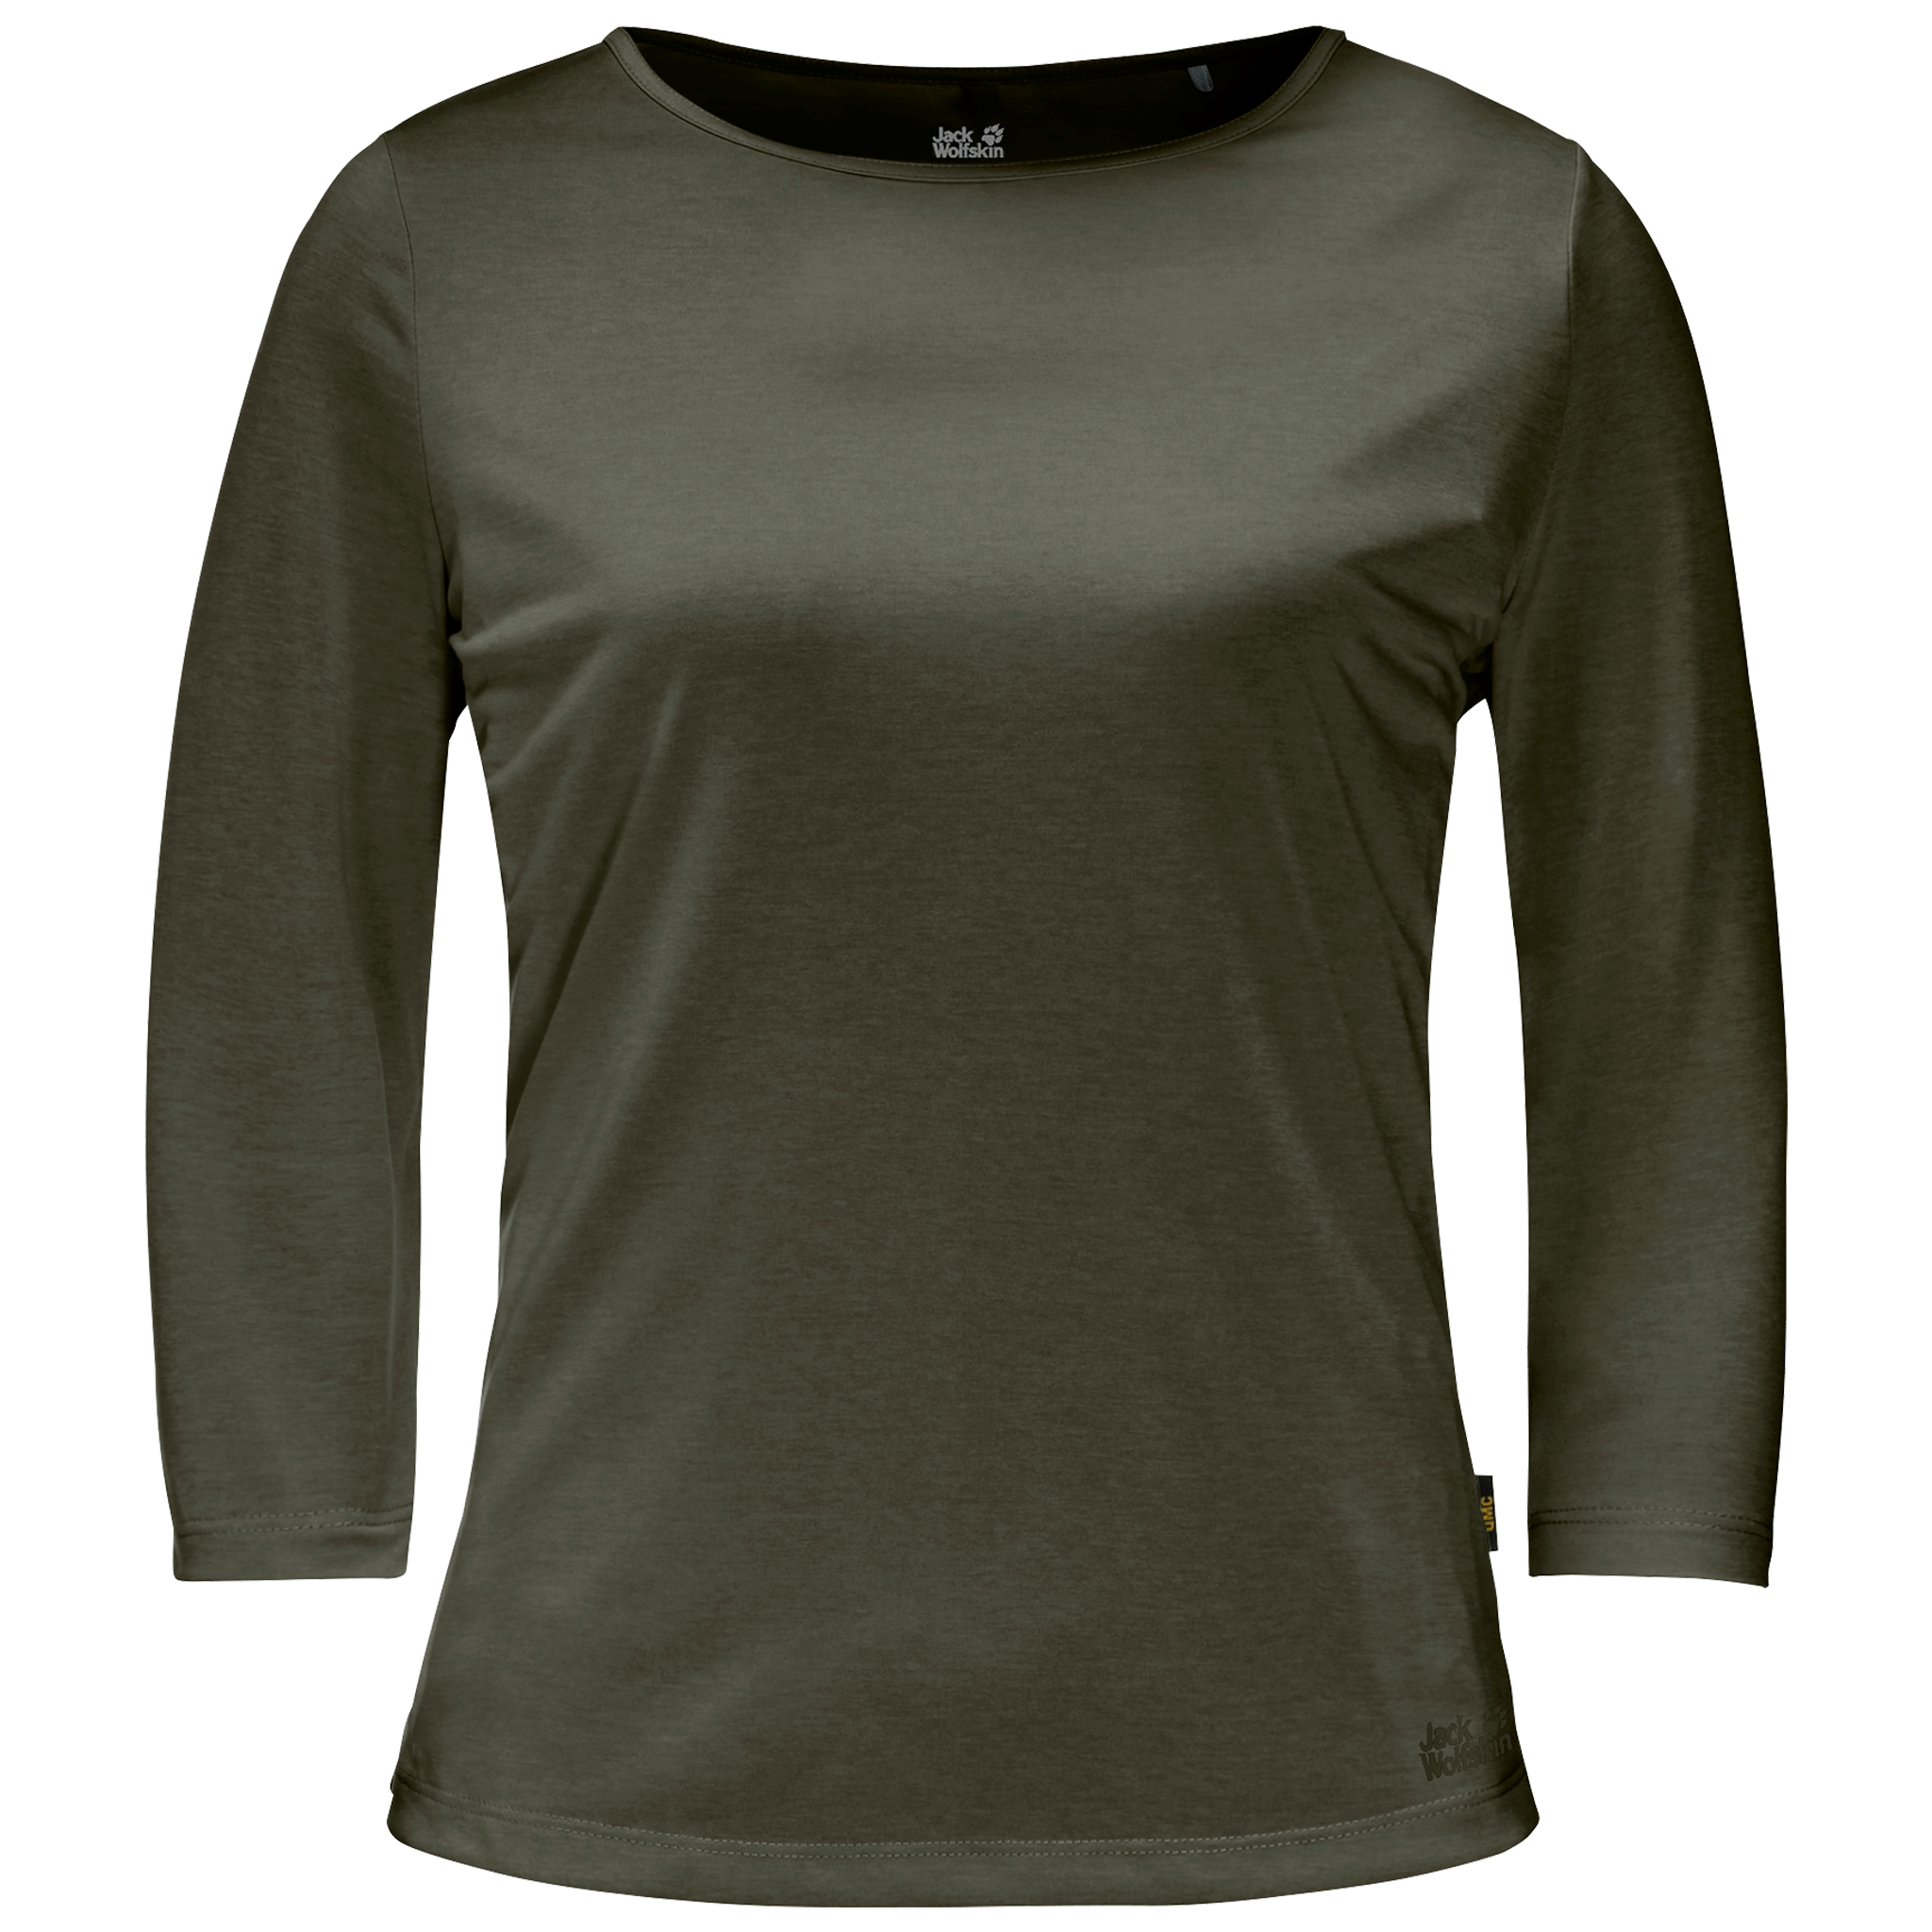 Green Pine Athletic Shirt Women